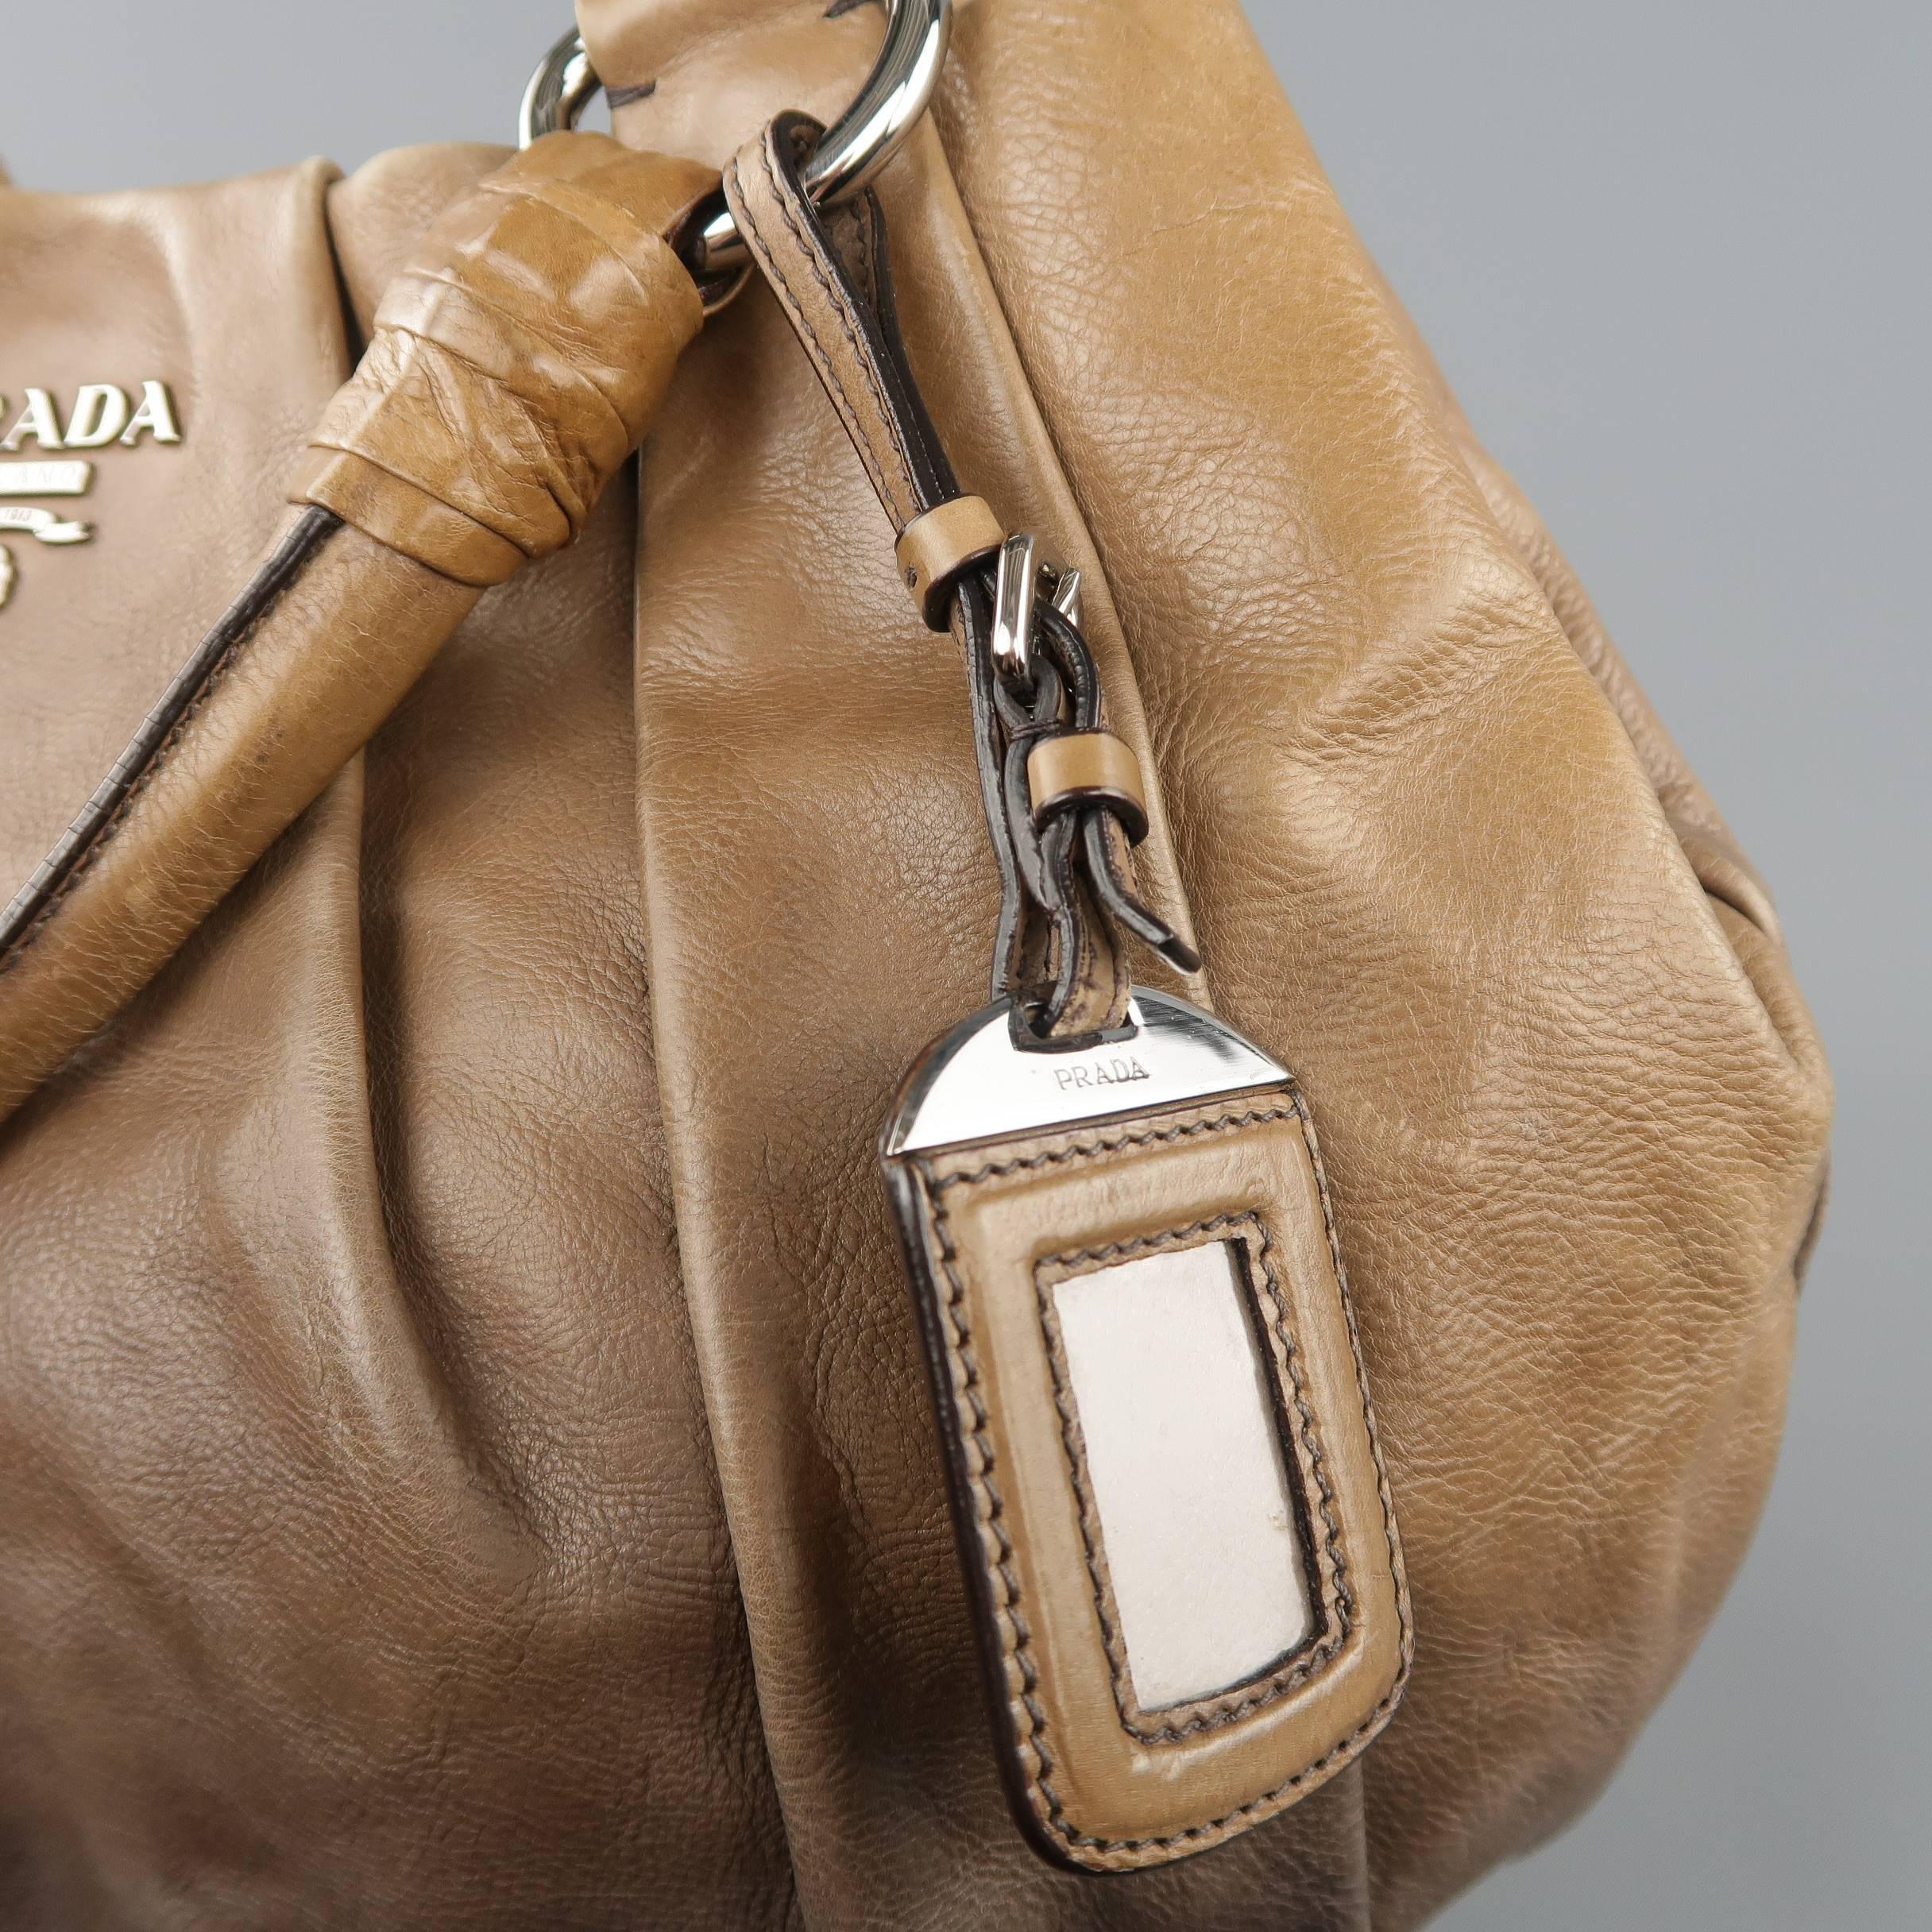 Women's or Men's PRADA Taupe Ombre Leather Degrade Blond Mordor Glace Handbag